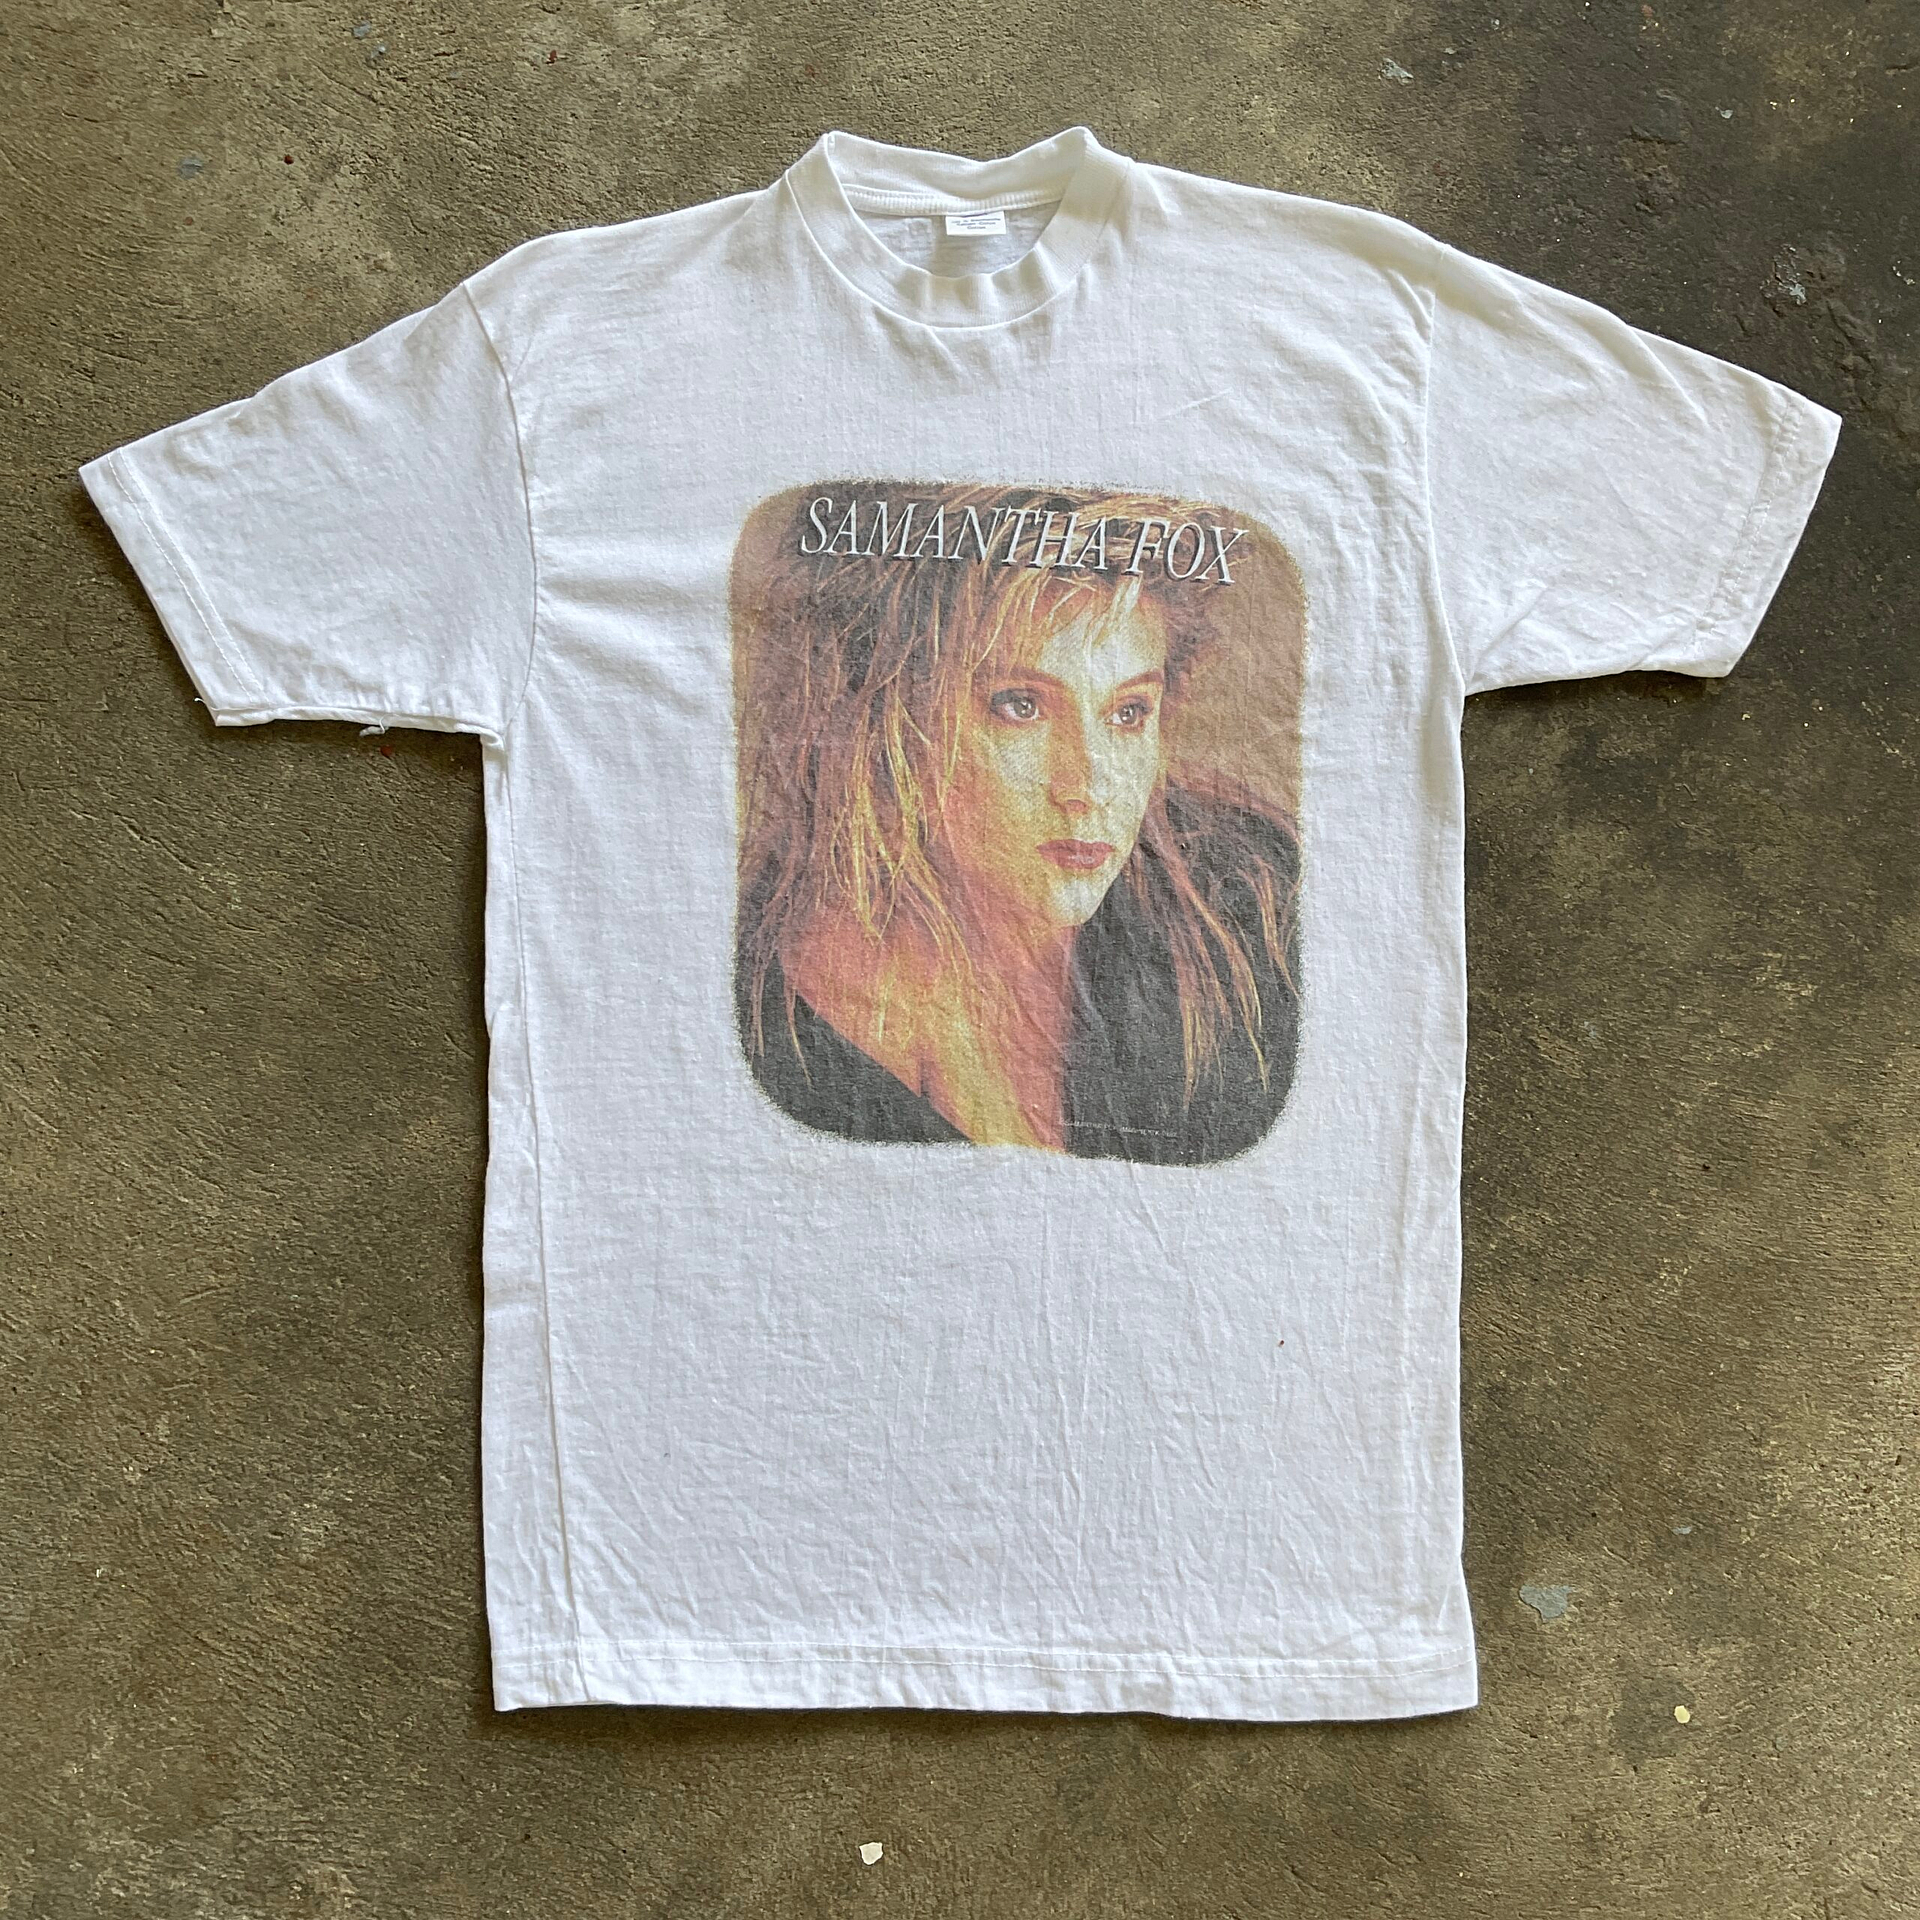 1987 Samantha Fox T-Shirt - Restored Vintage